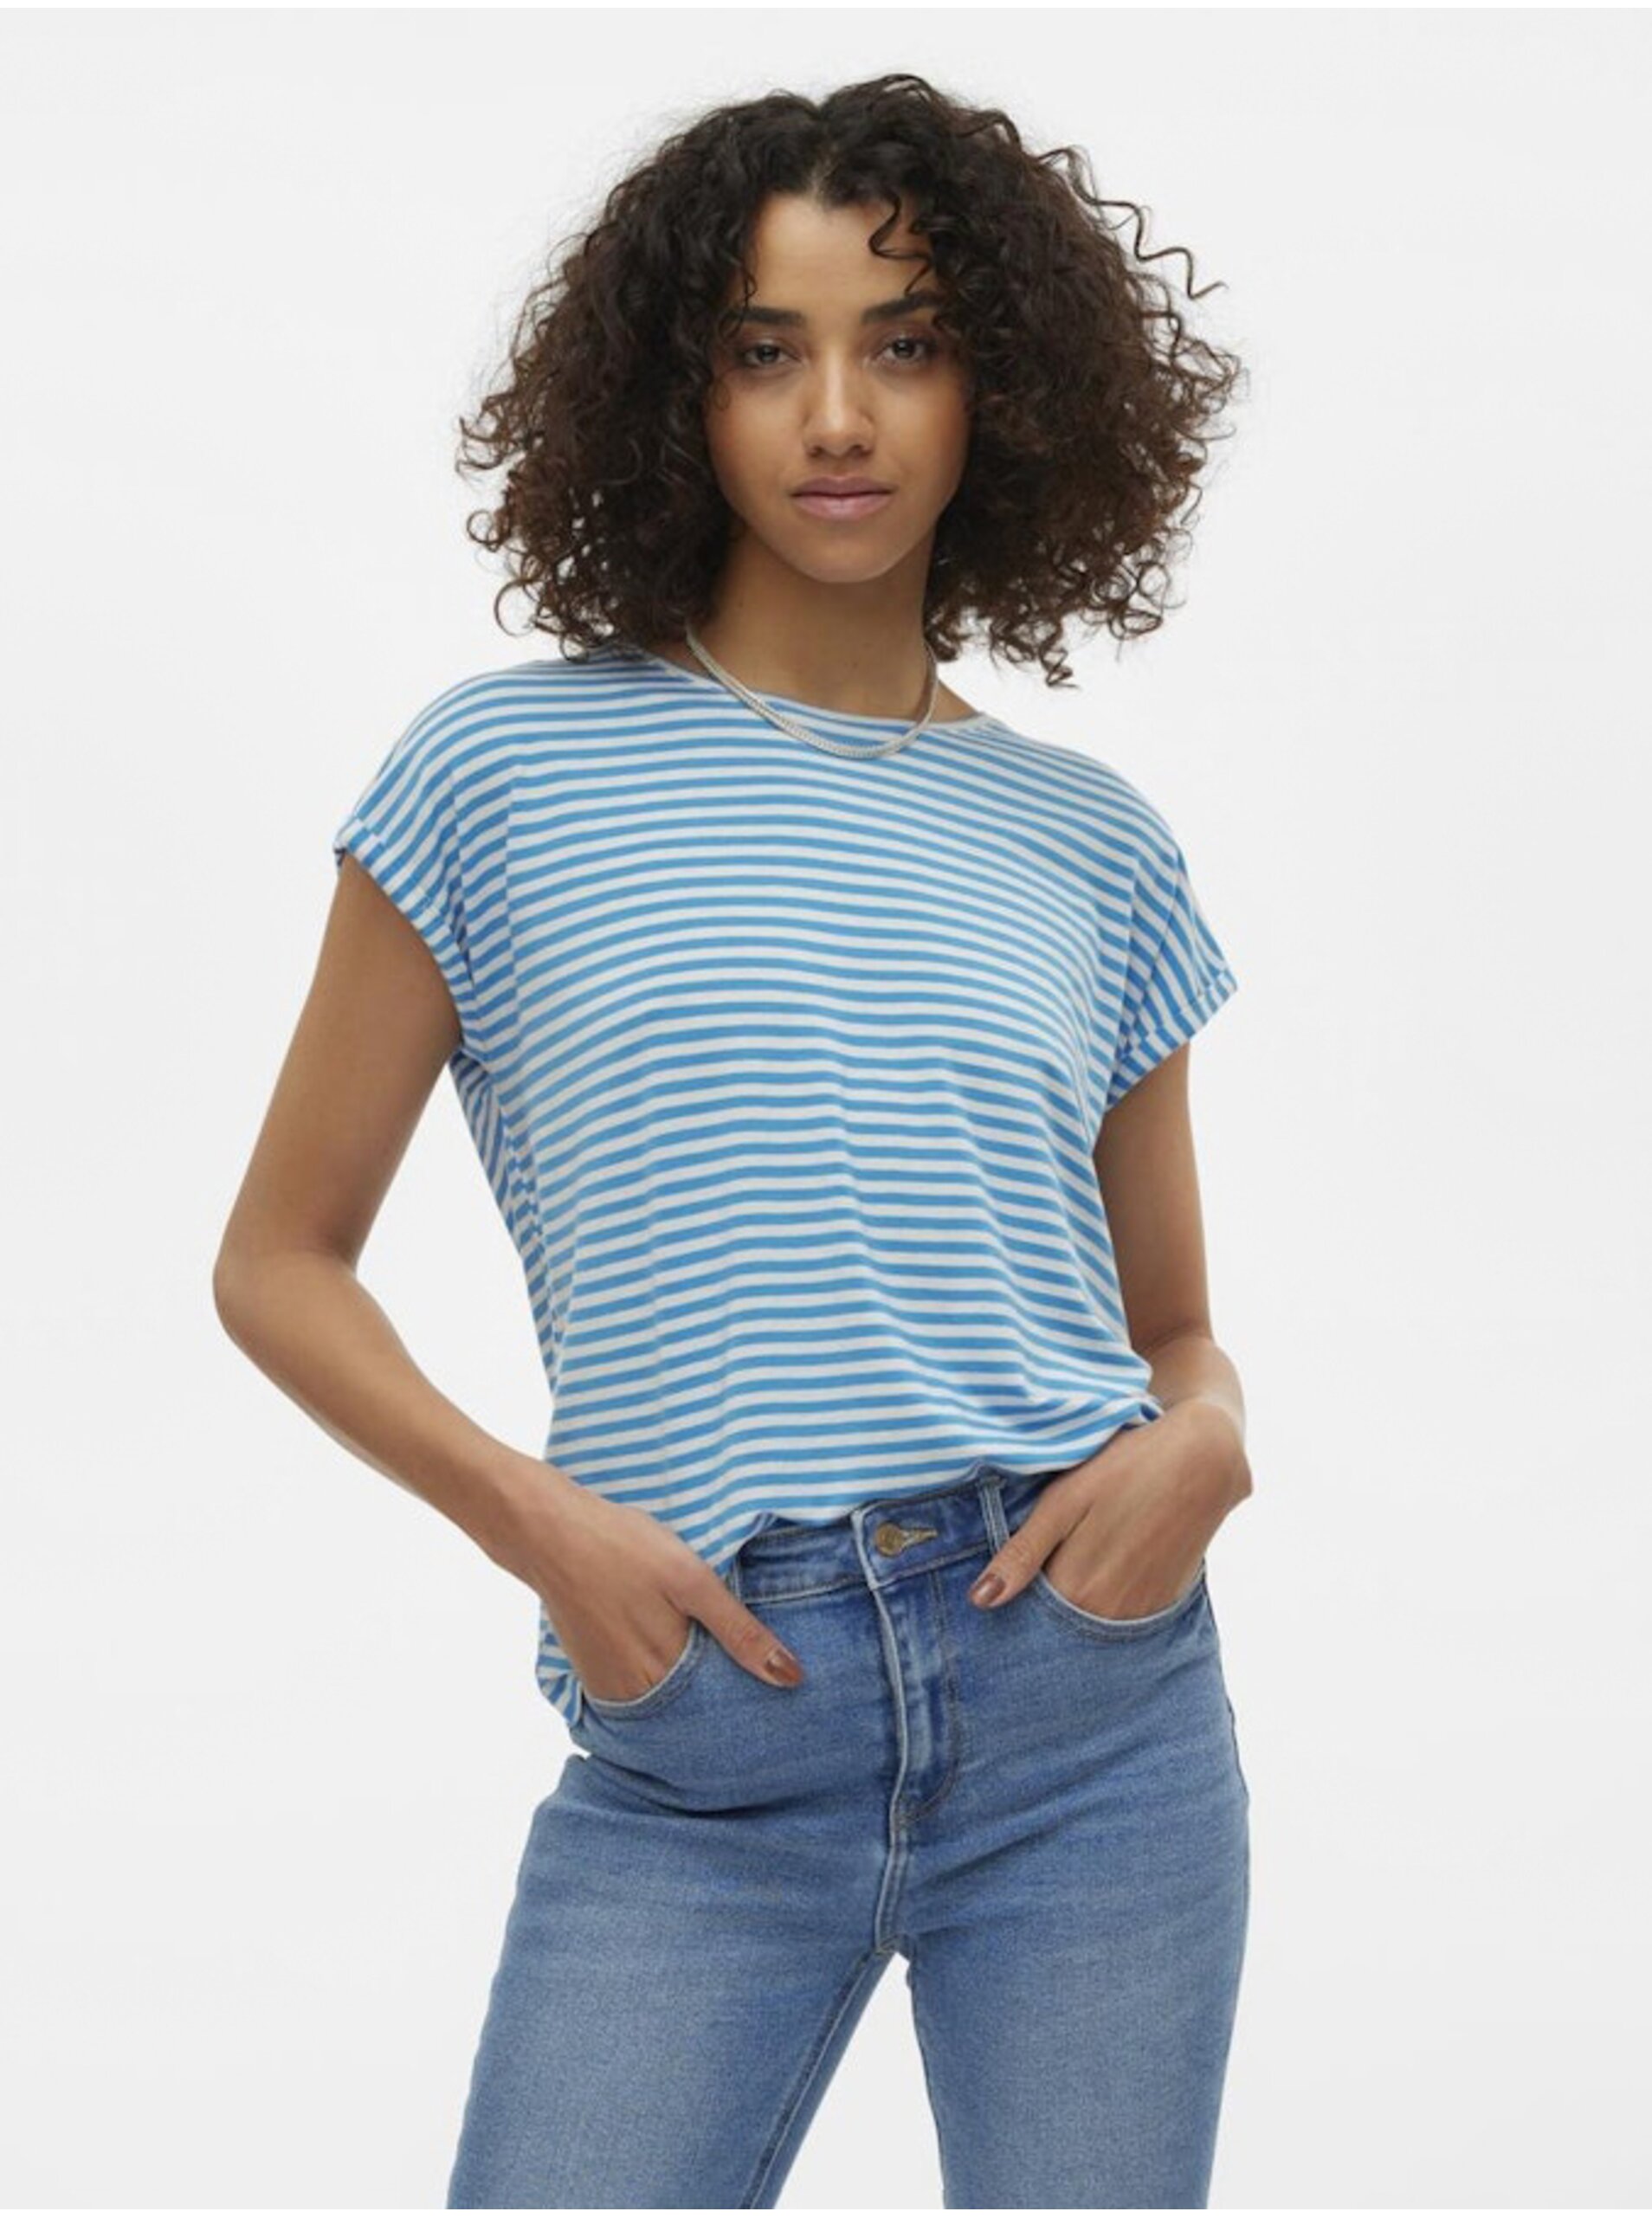 E-shop Bílo-modré dámské pruhované tričko Vero Moda Ava